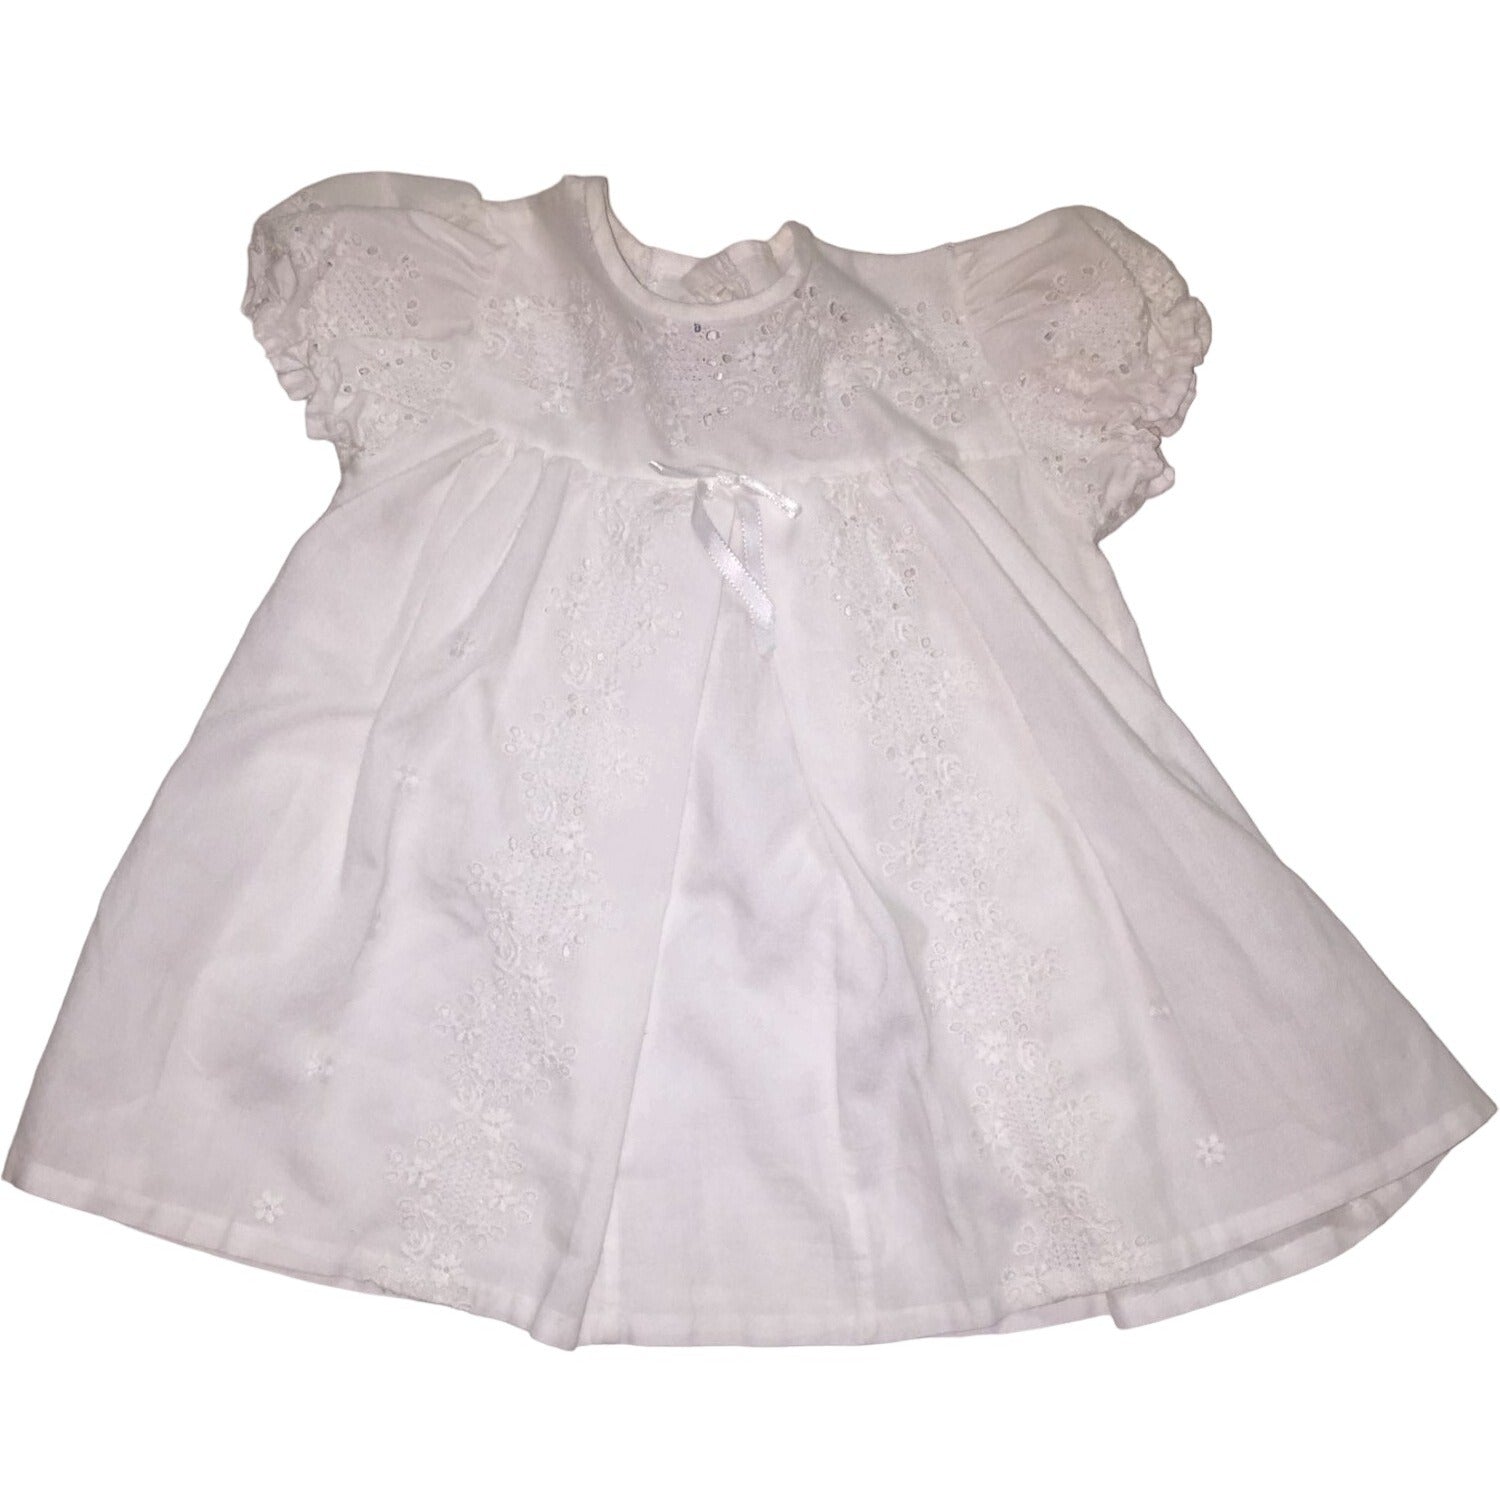 ALEXIS USA Baby Girl White Ruffled Dress